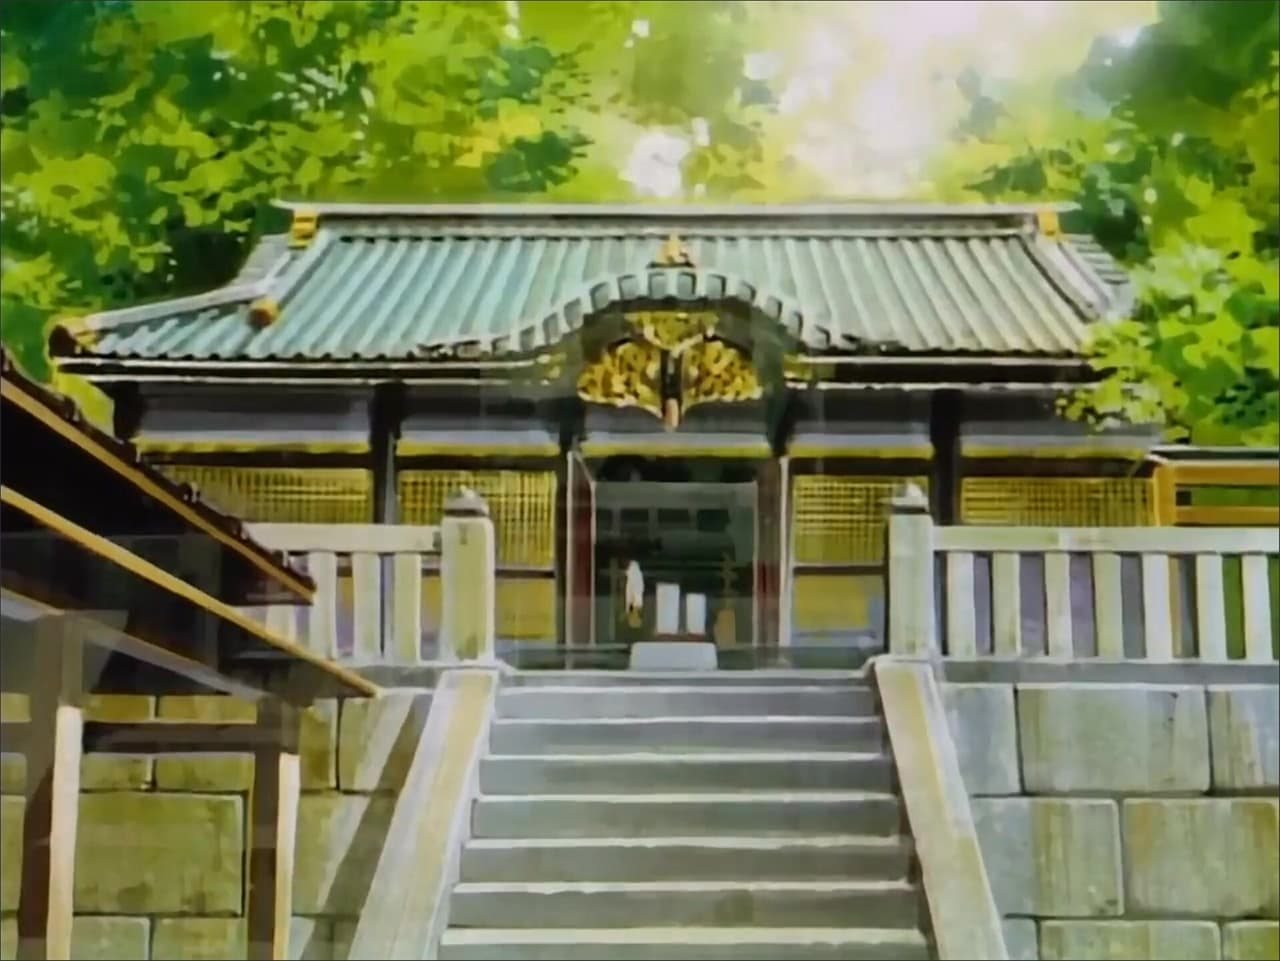 Rurouni Kenshin - Season 3 Episode 31 : The Enemy Awaits in Senjogahara